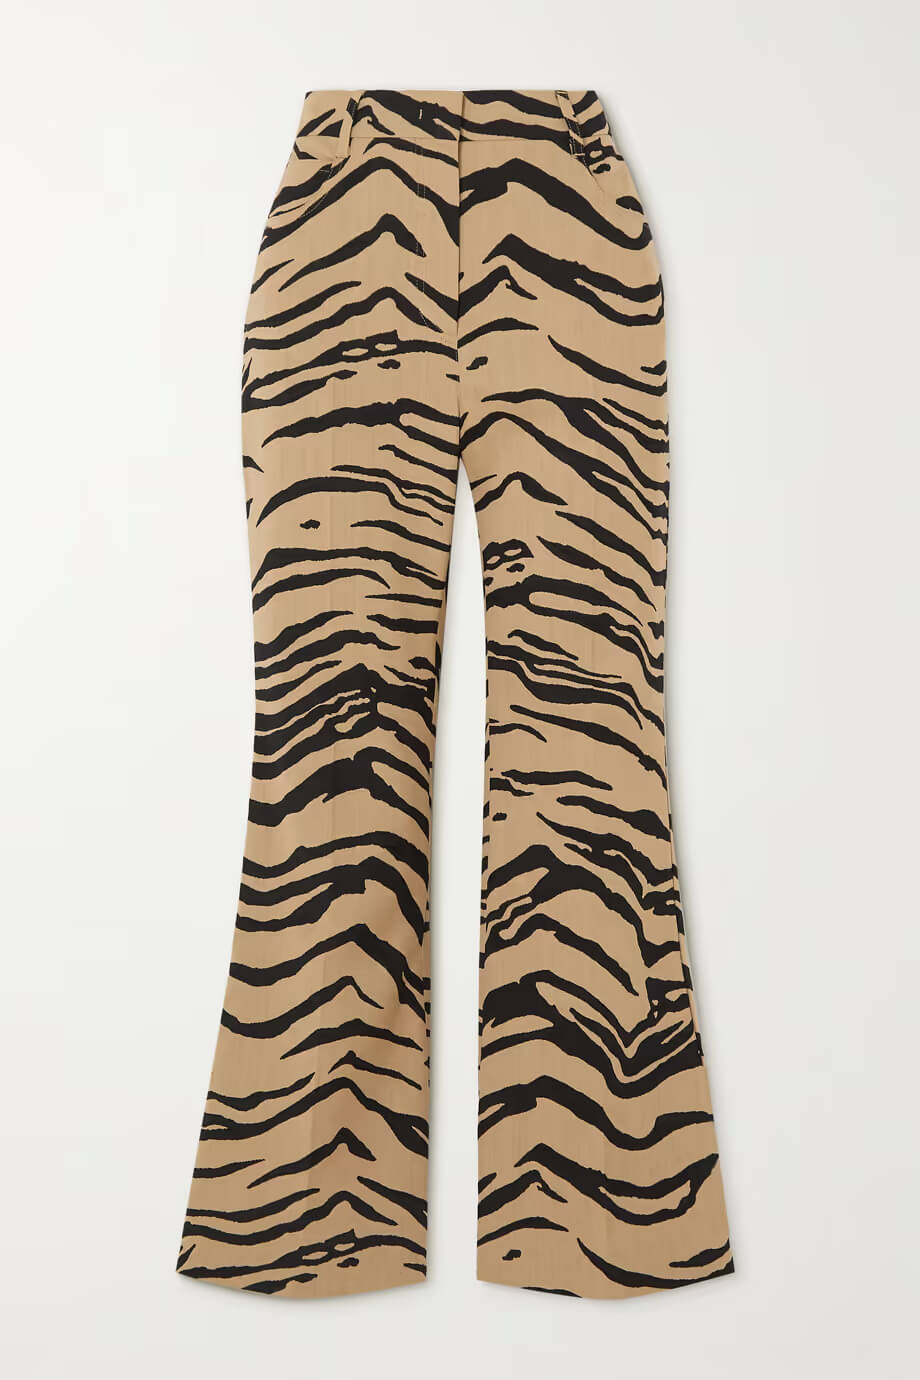 STELLA MCCARTNEY Cropped zebra-print wool-blend flared pants